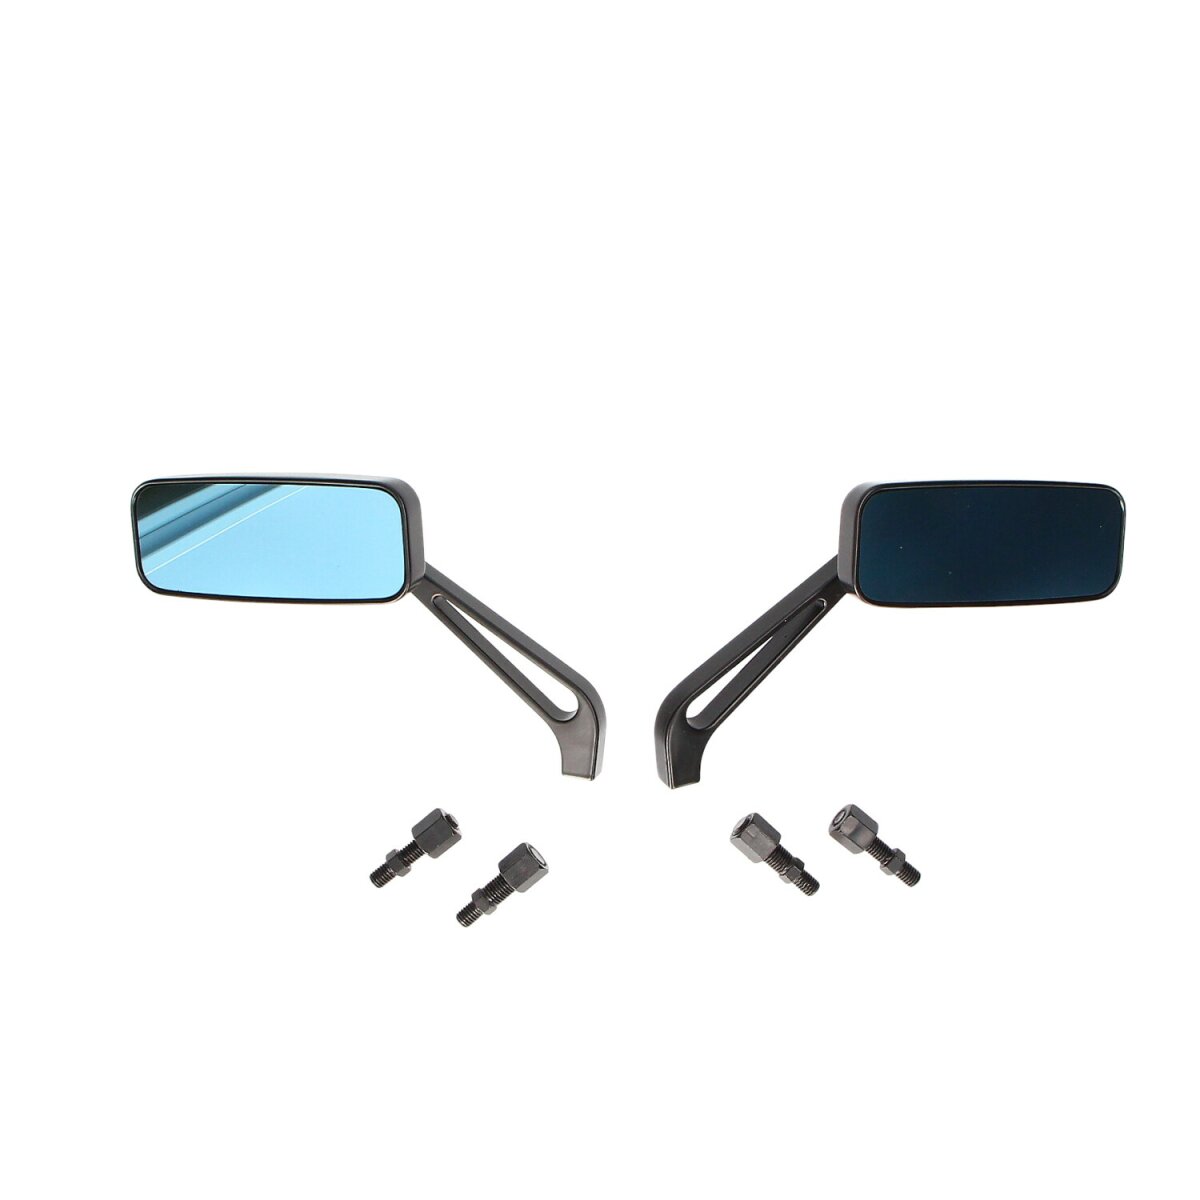 Universal Spiegel M8 / Schelle eckig Form (rechts/links) für Moped Mofa  Simson - 3,29 €